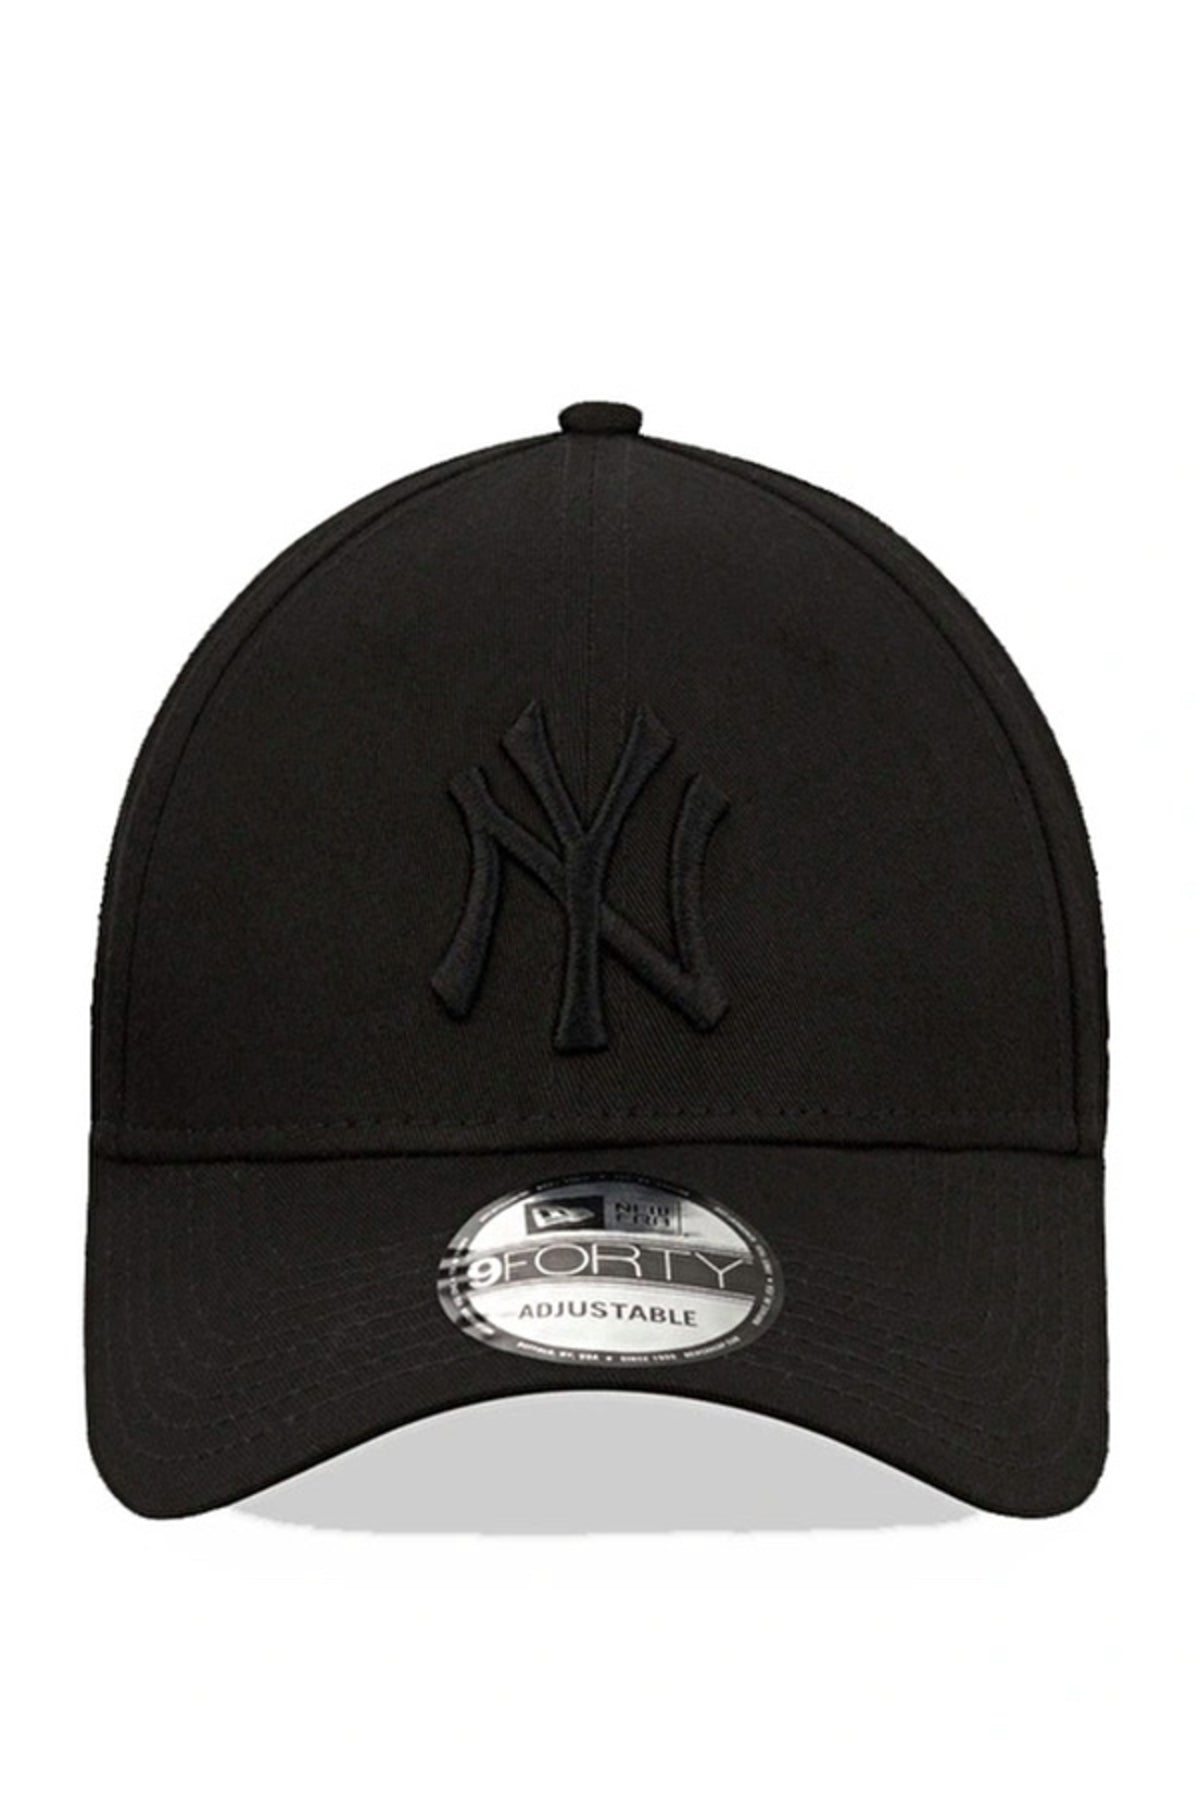 Ny New York 3-Piece Unisex Hat Black